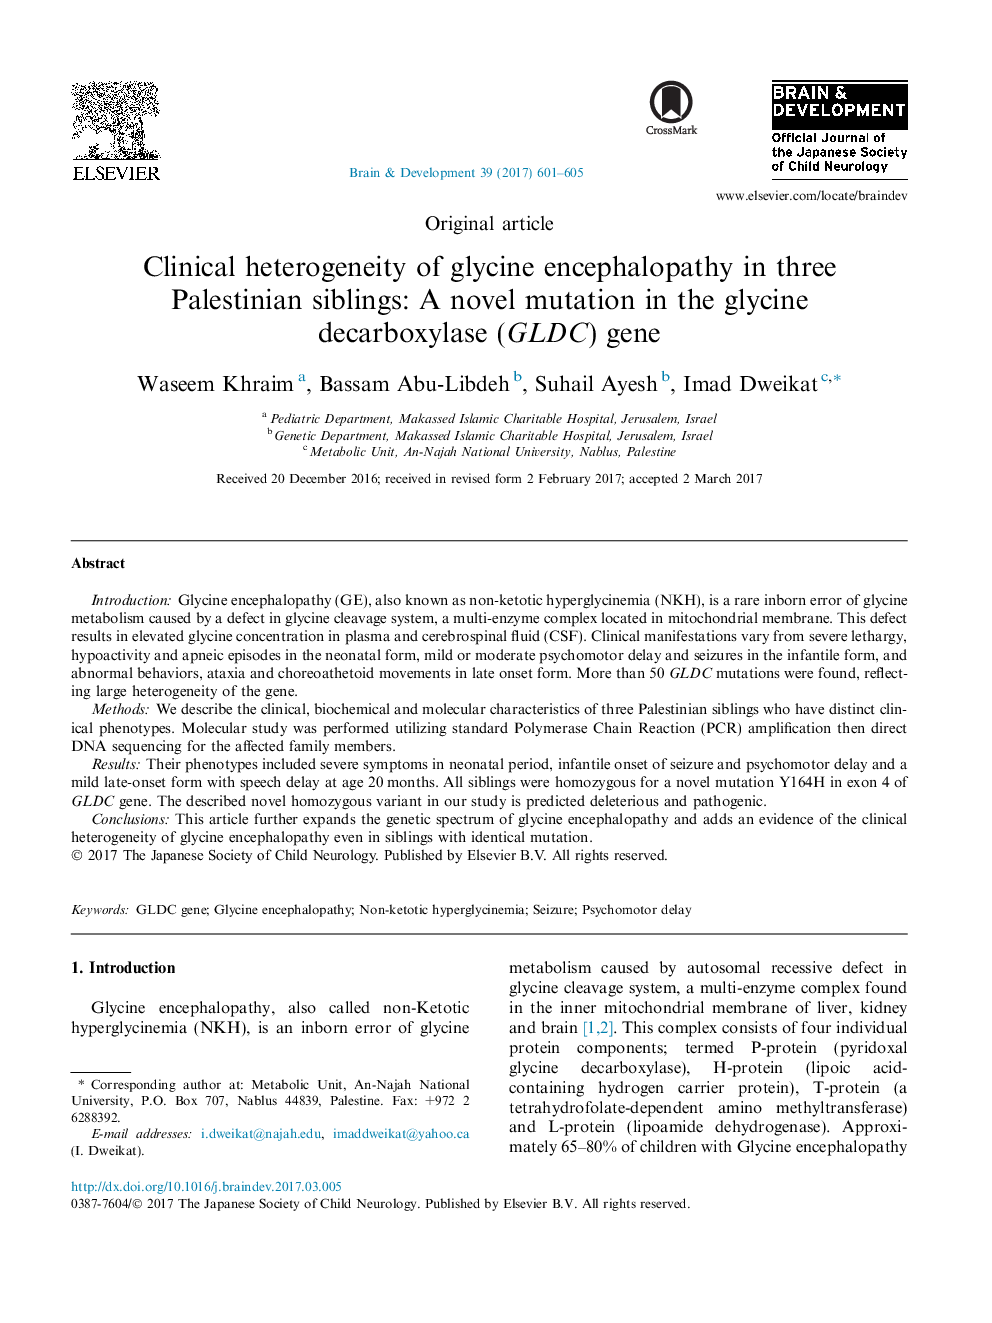 Original articleClinical heterogeneity of glycine encephalopathy in three Palestinian siblings: A novel mutation in the glycine decarboxylase (GLDC) gene